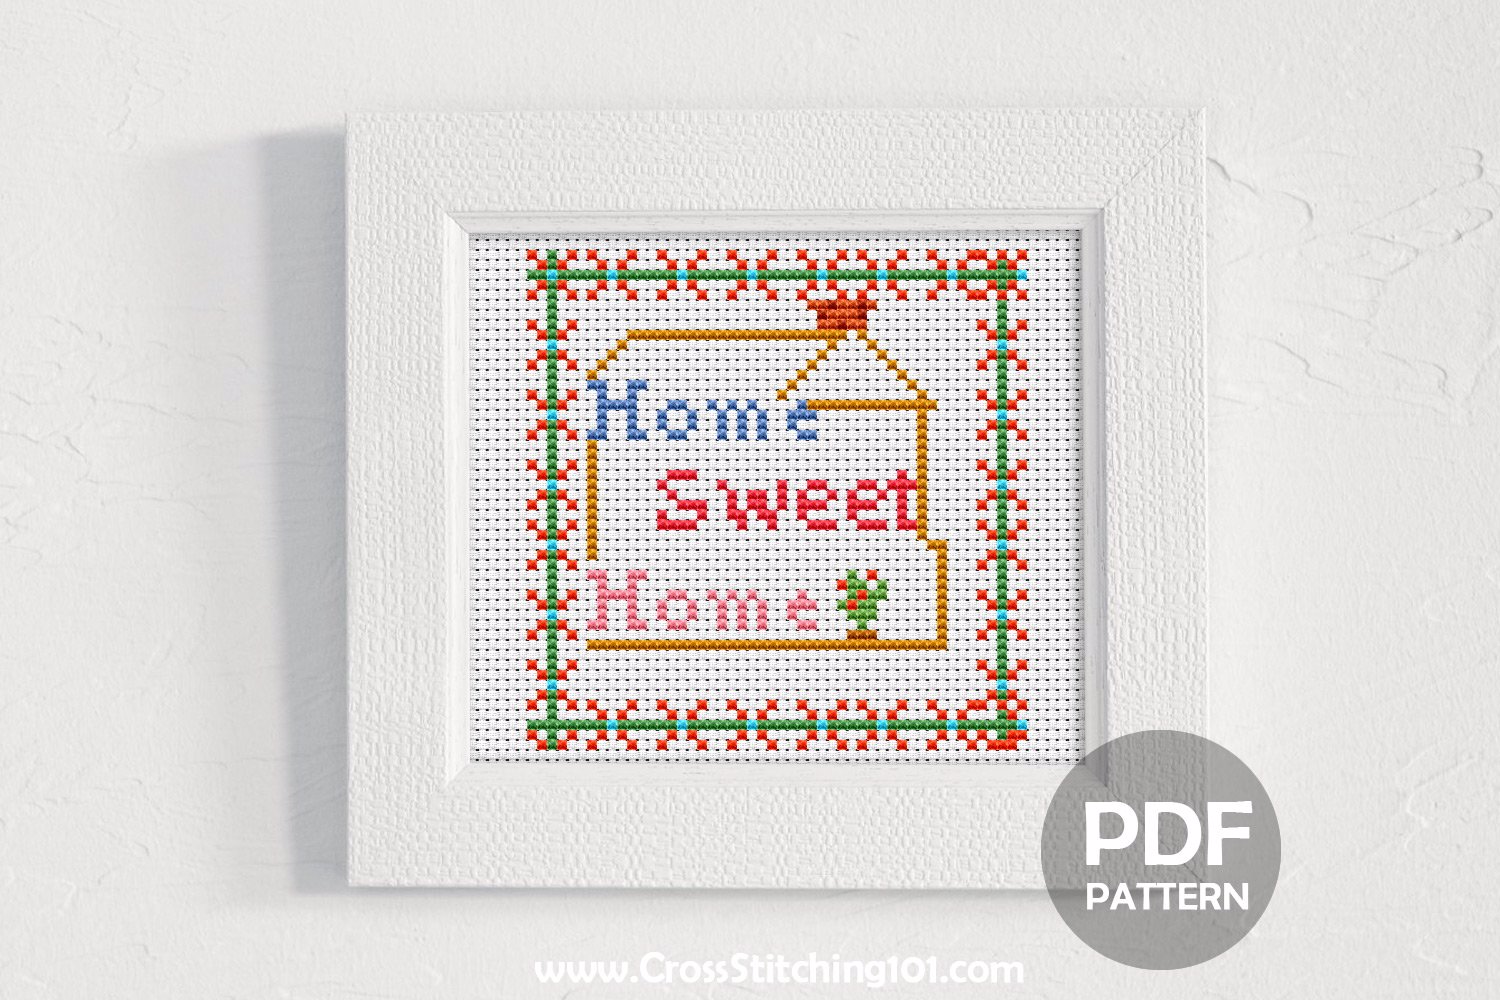 Home Sweet Home 4 CrossStitch Design